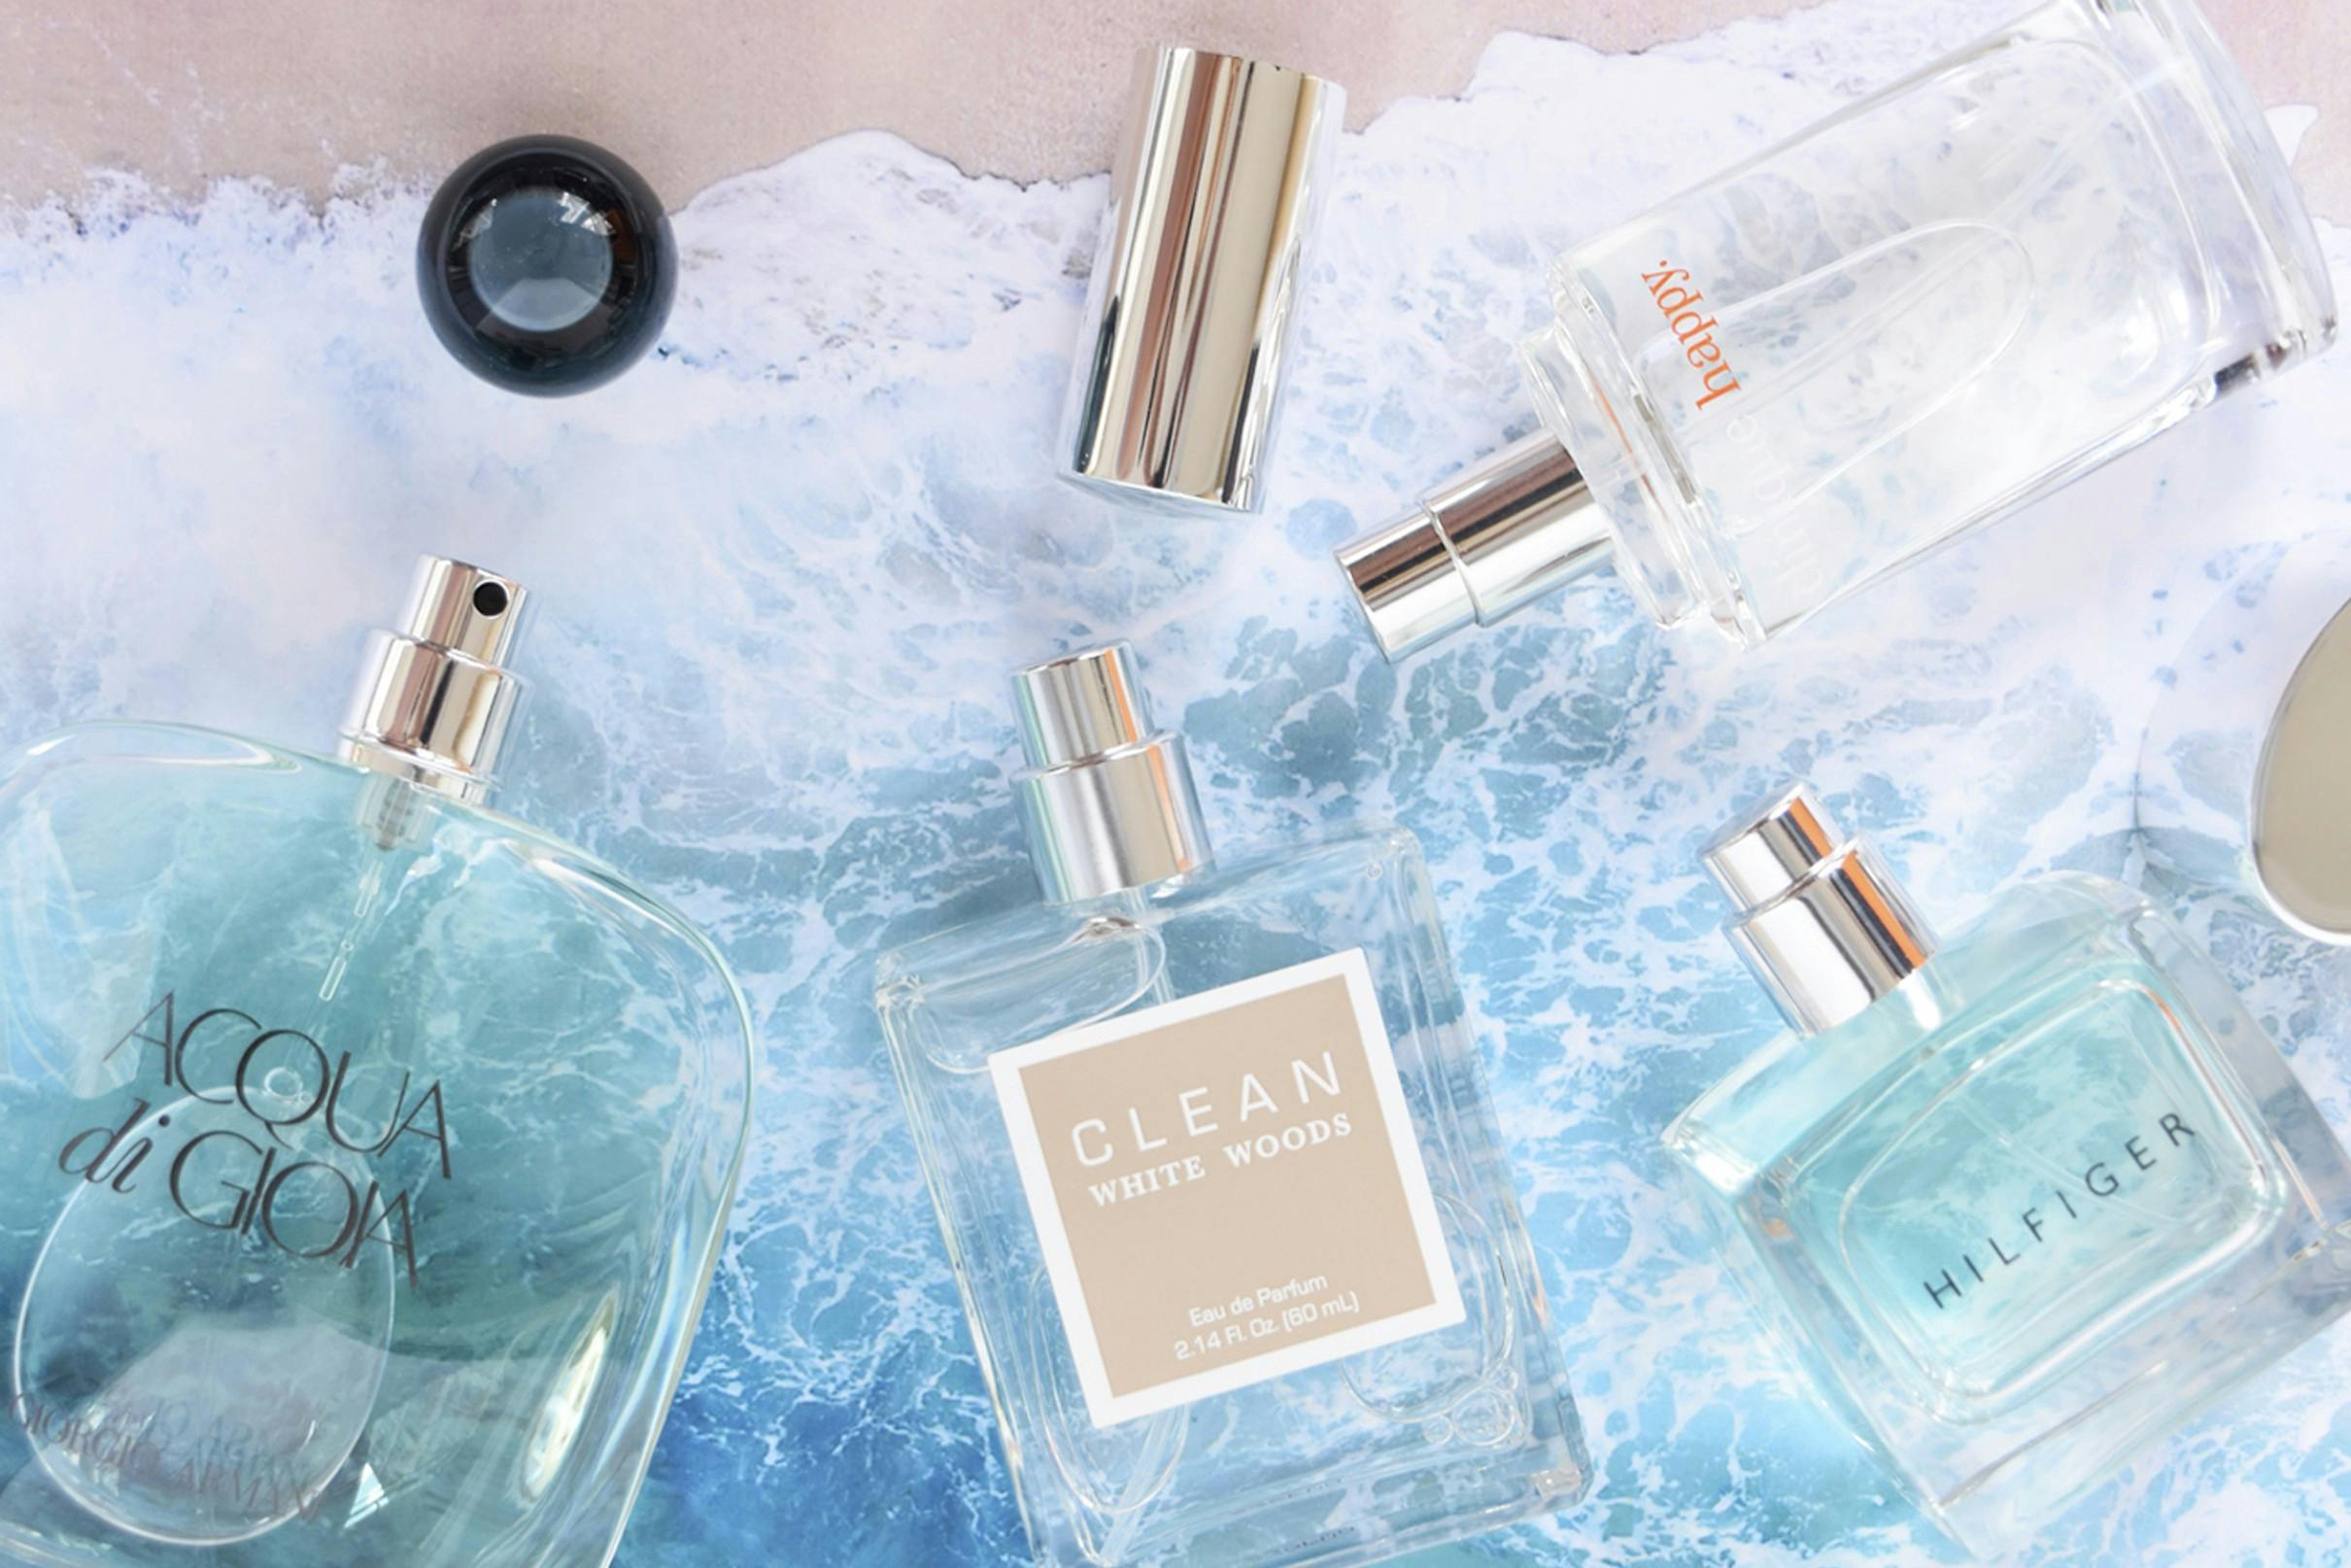 Parfumer: Giorgio Armani, DKNY, Clinique Happy, Clean 